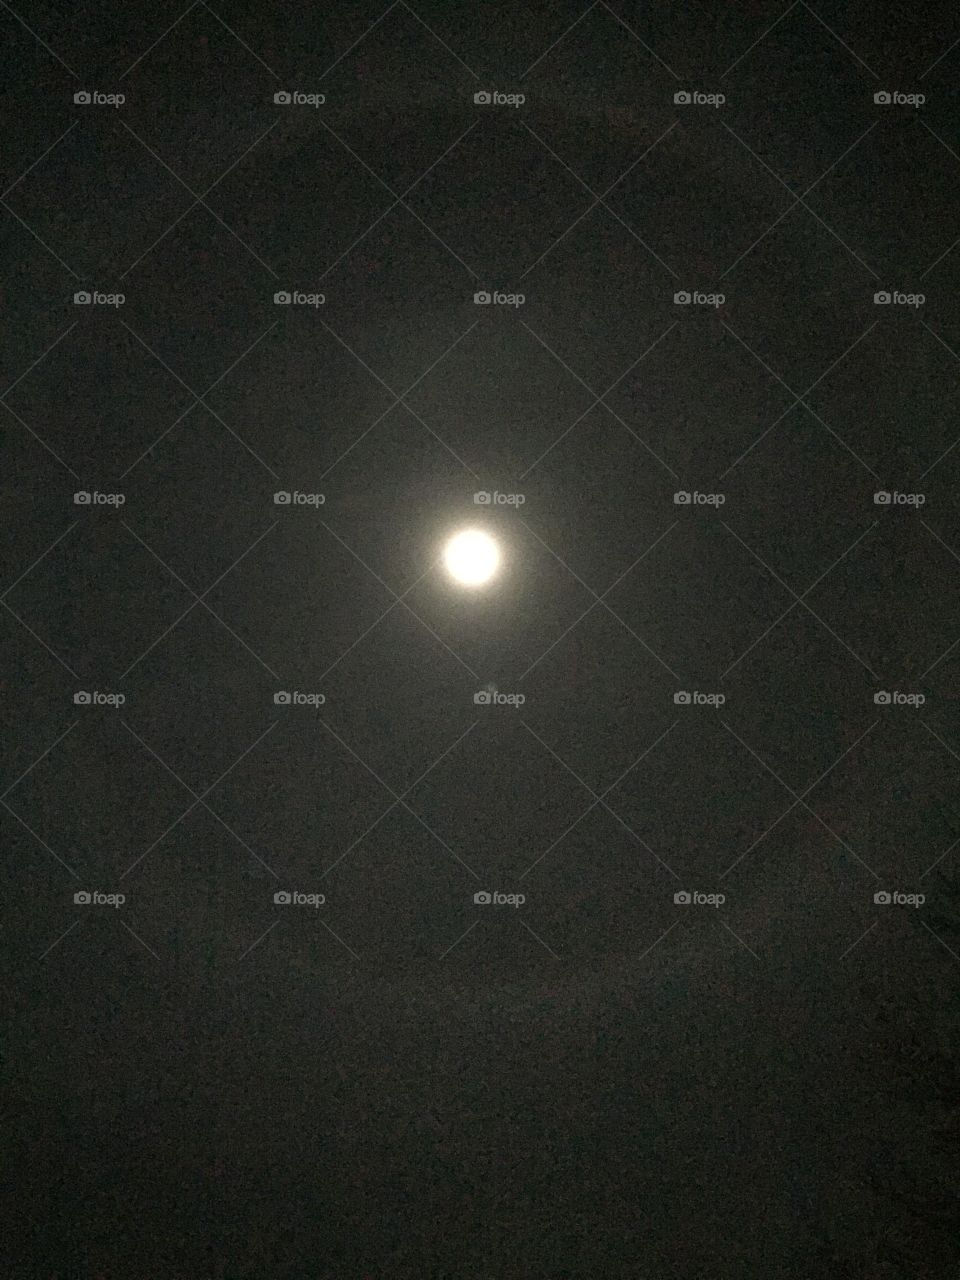 Circle around the moon